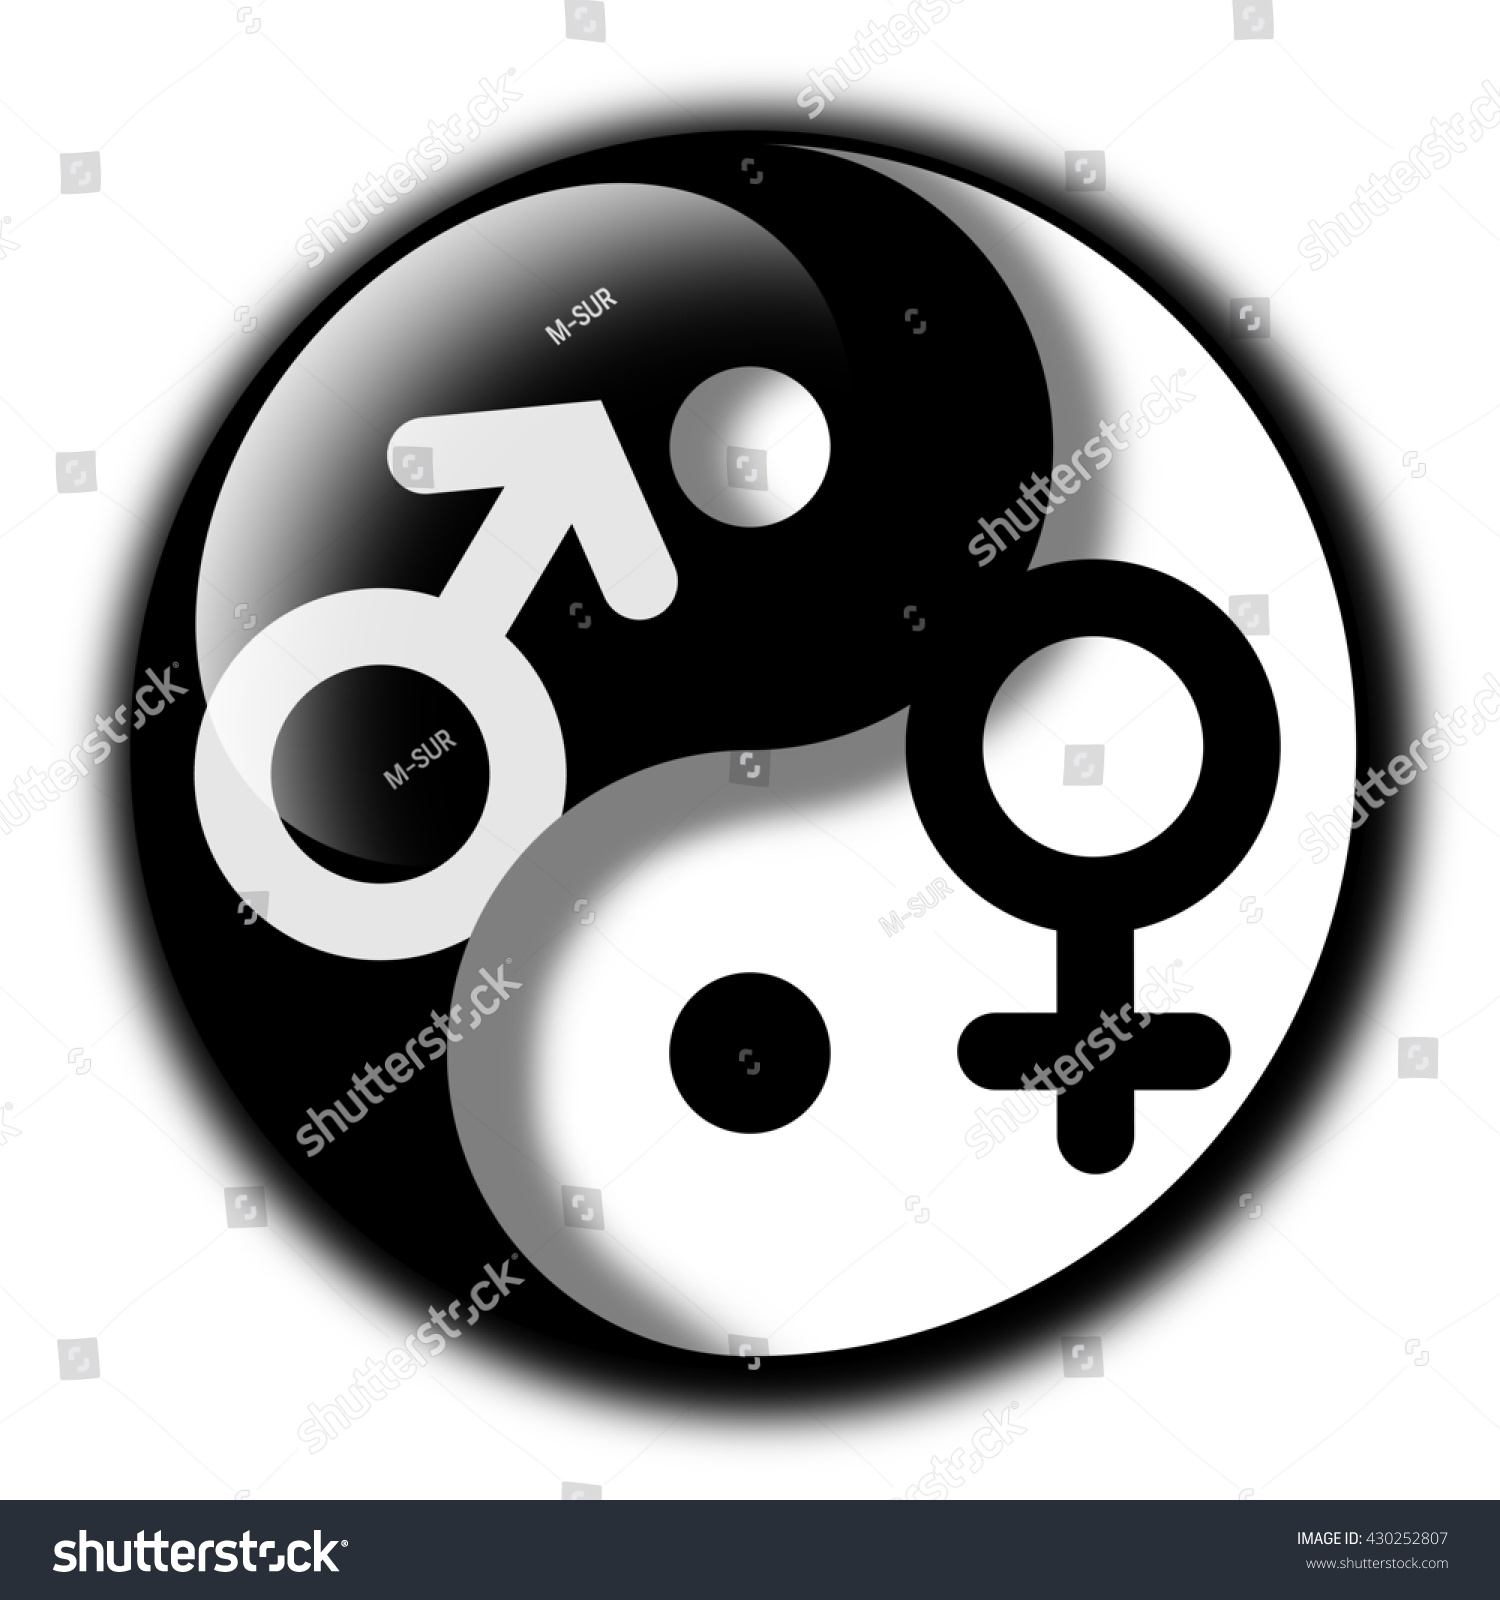 Yin yang sex